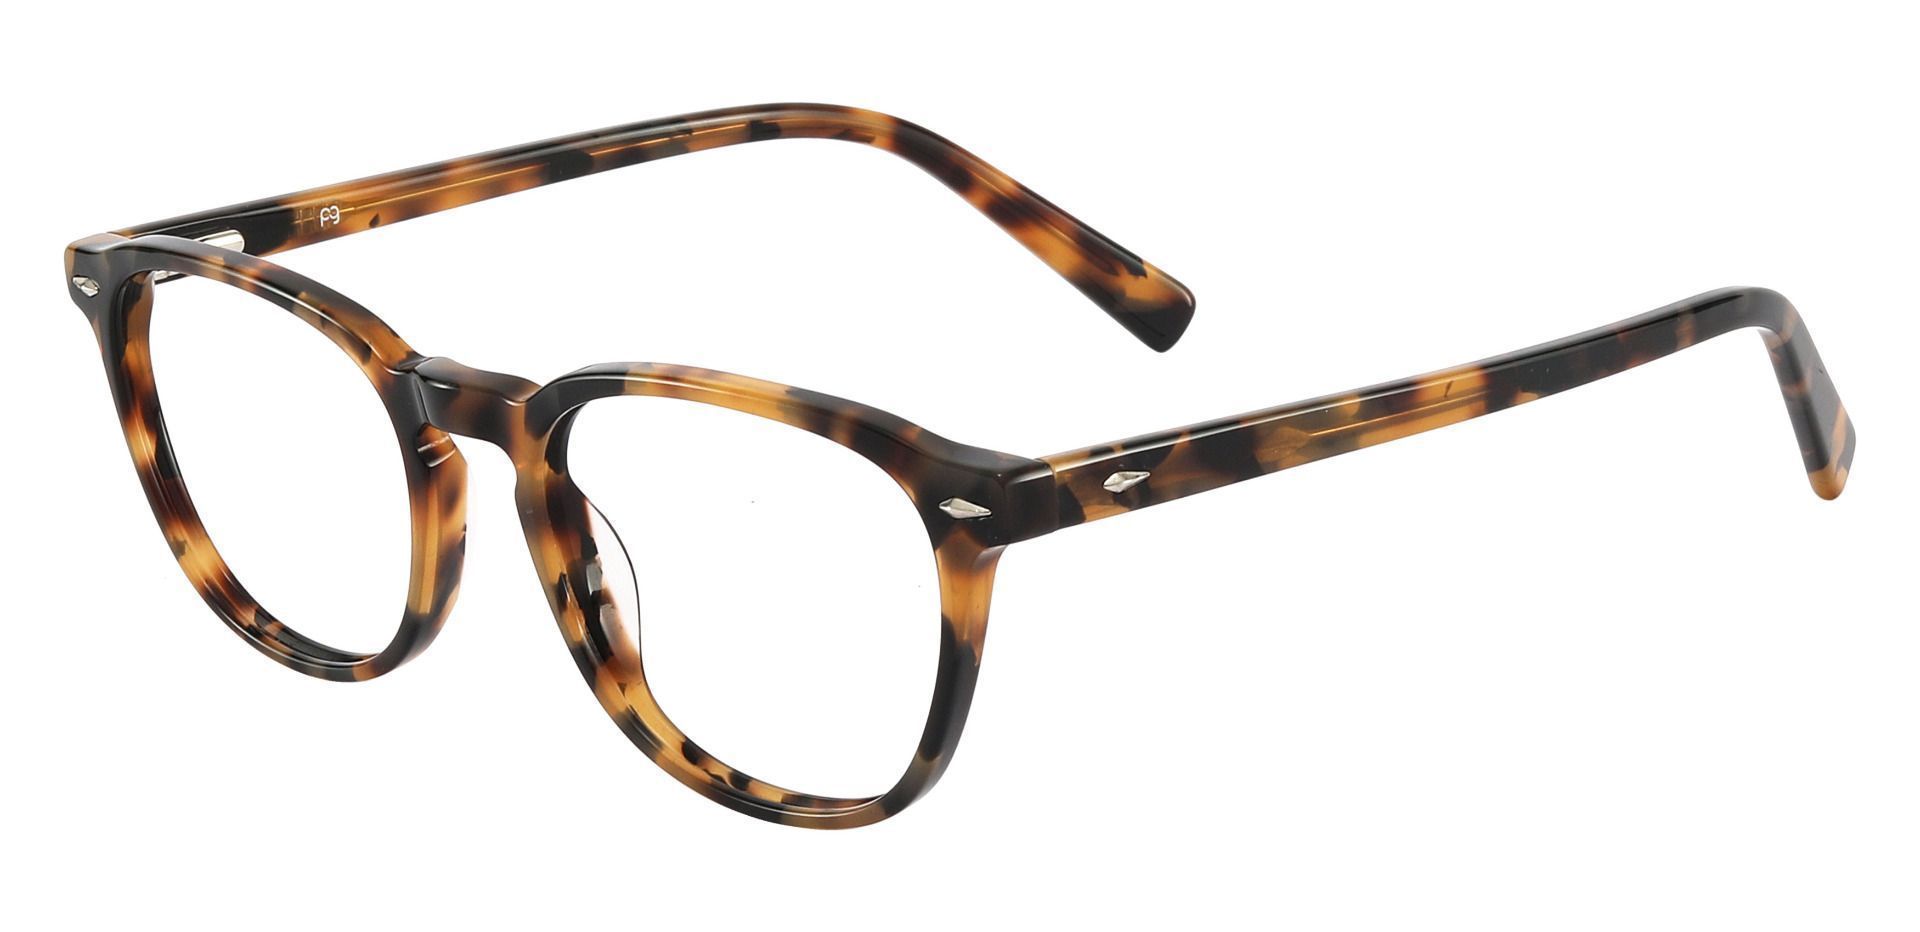 Marilla Oval Prescription Glasses - Tortoise